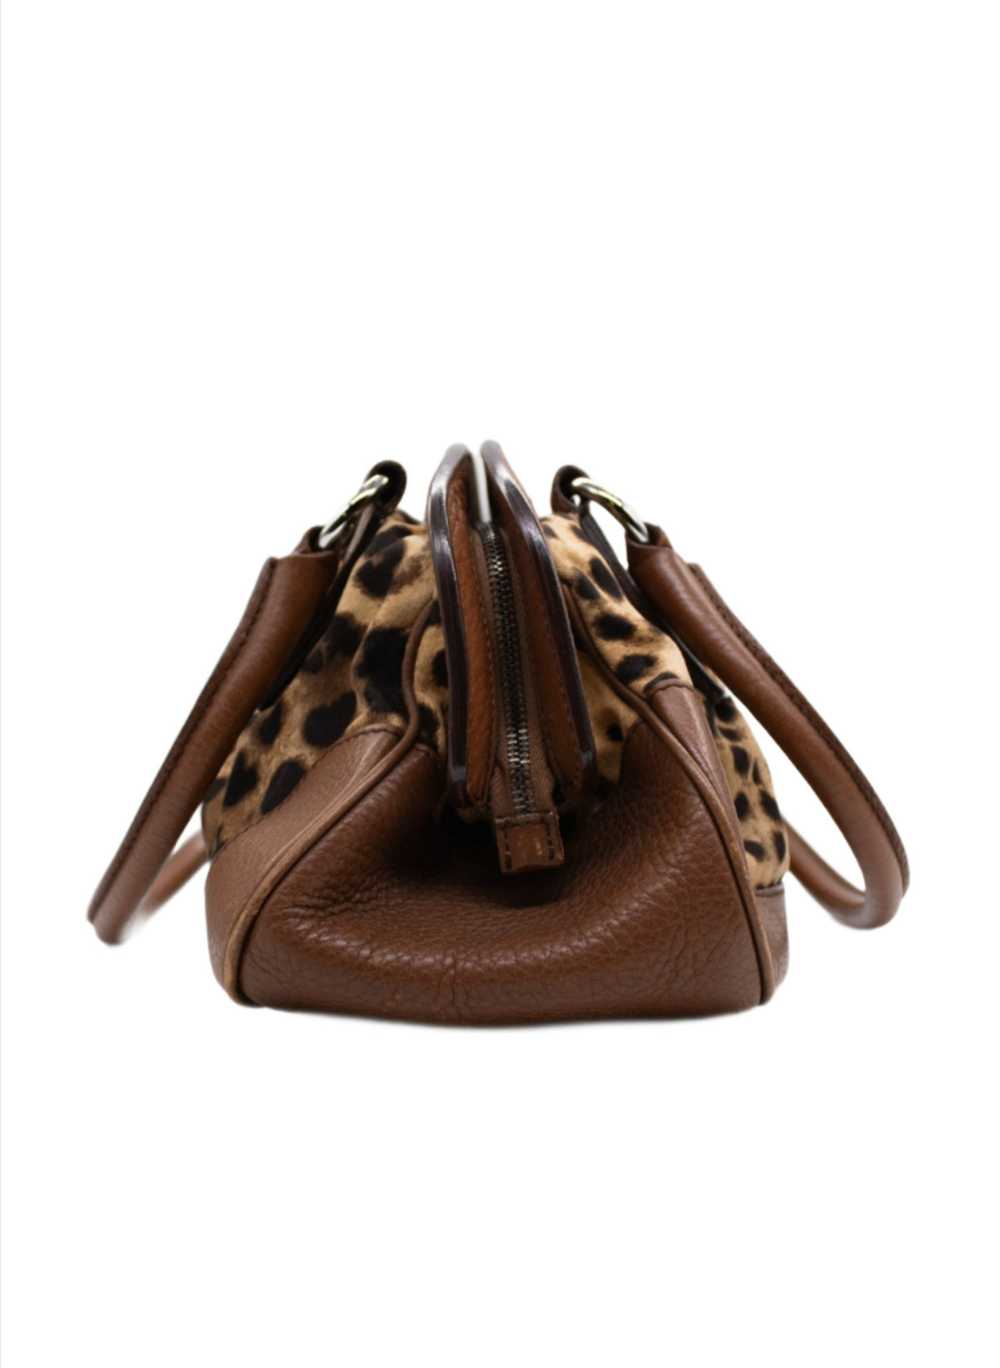 Dolce & Gabbana Leopard Semi Shoulder Duffle Bag - image 3